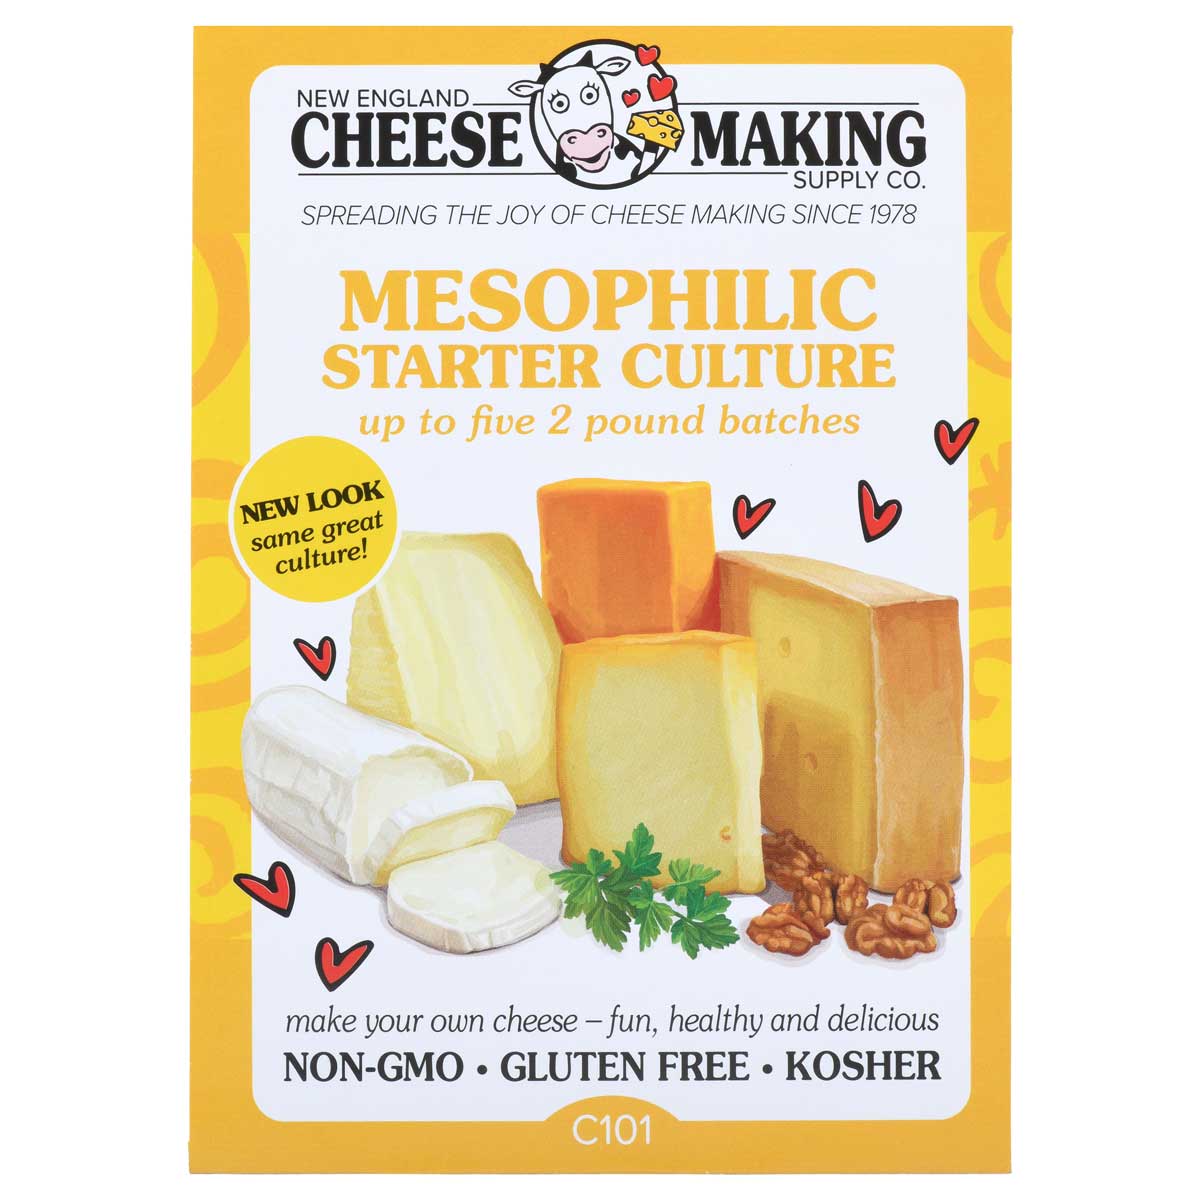 Homemade Cheese Making Equipment: A Quick & Thorough Guide 